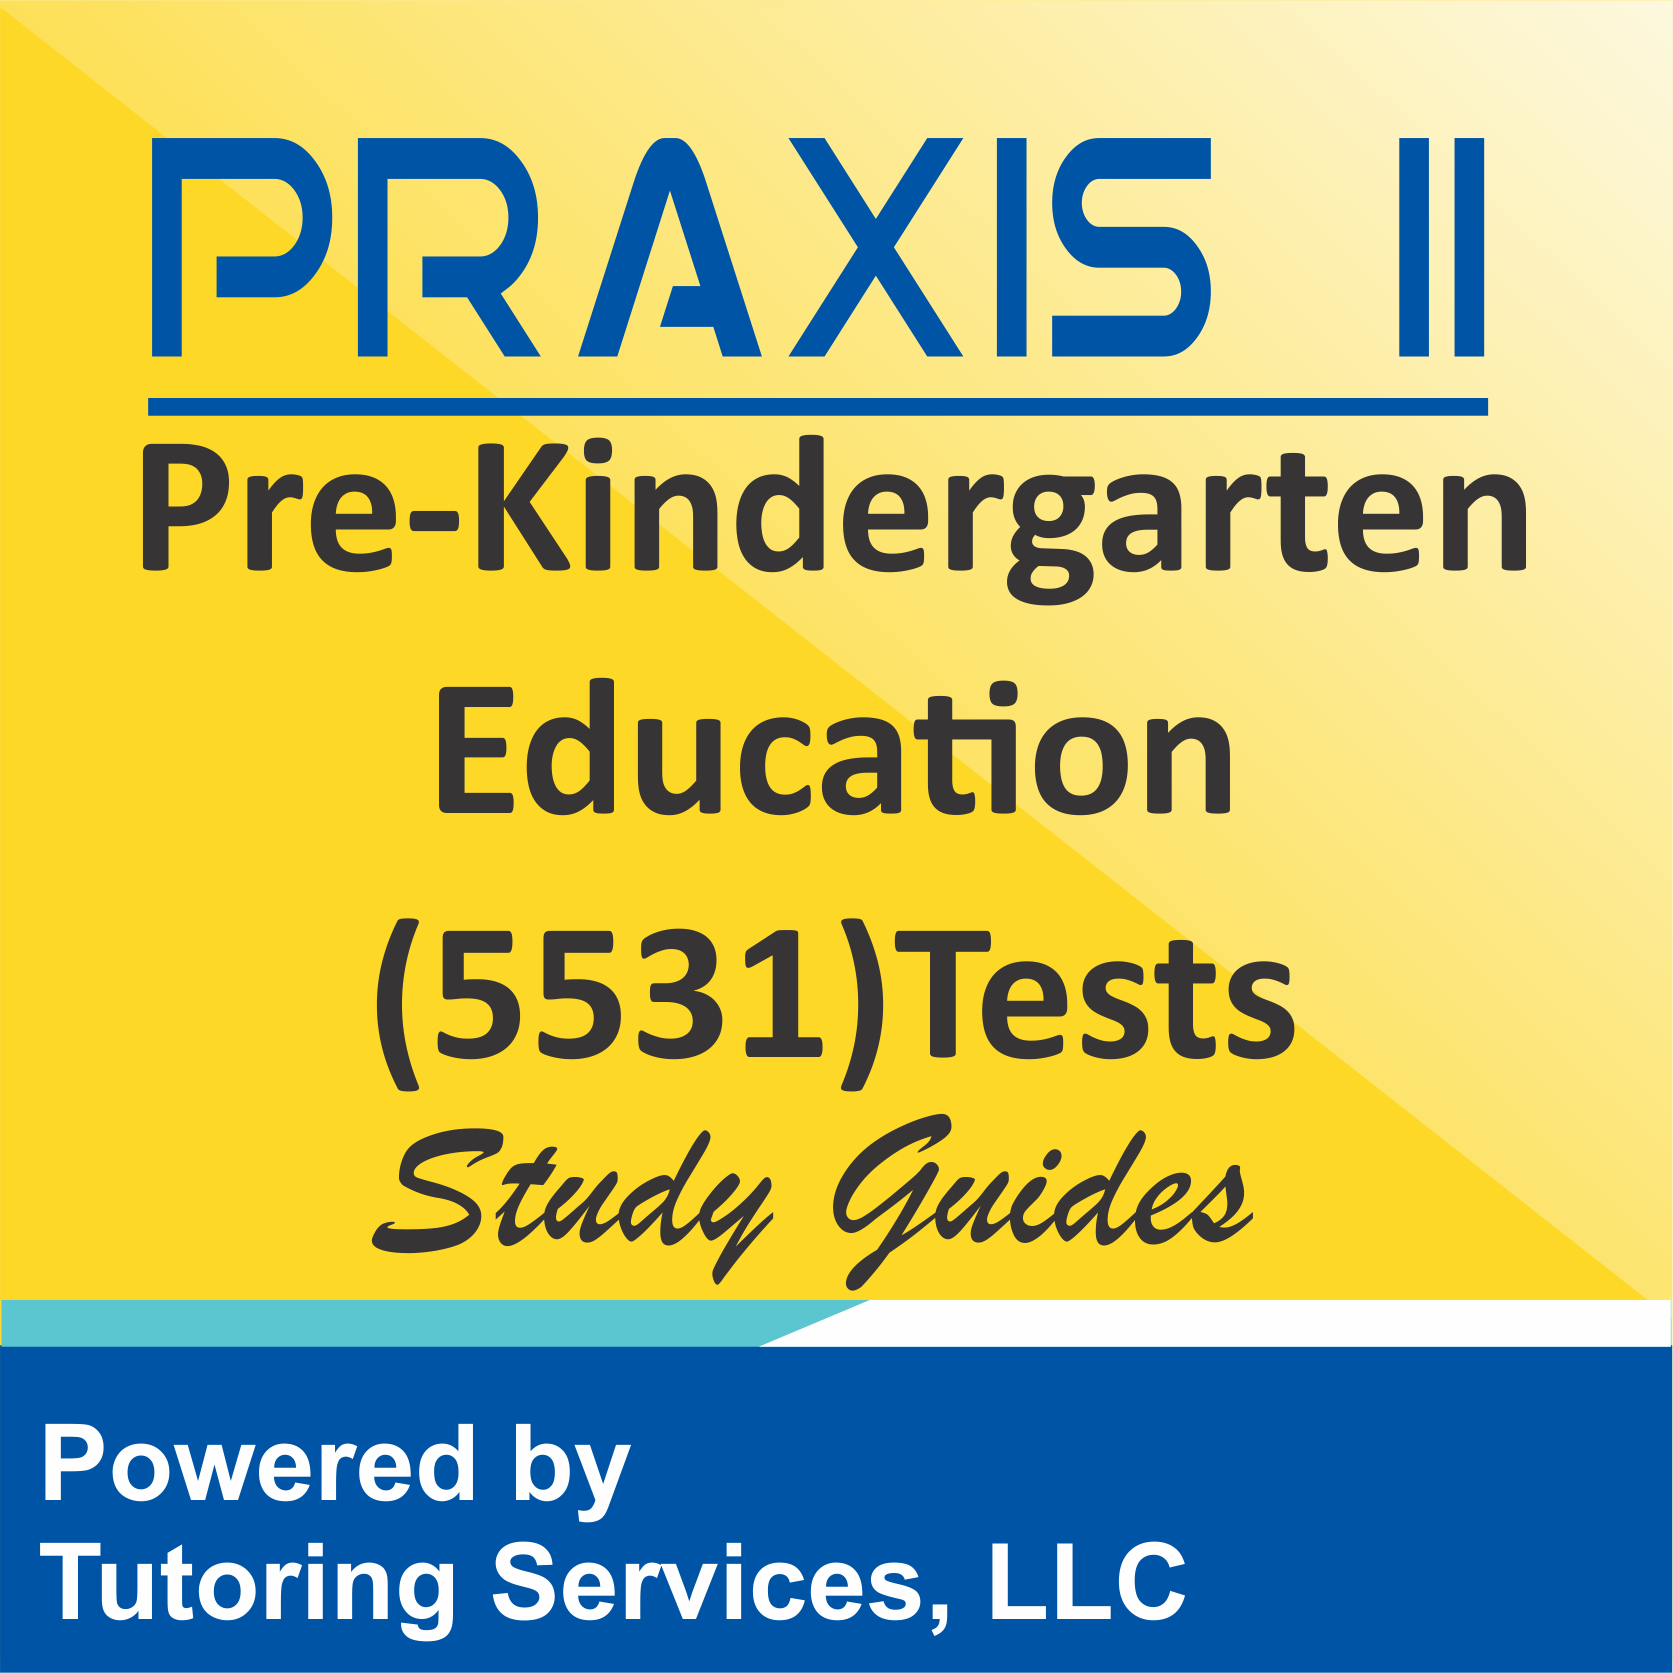 Praxis II Pre-Kindergarten Education (5531) Examination Syllabus